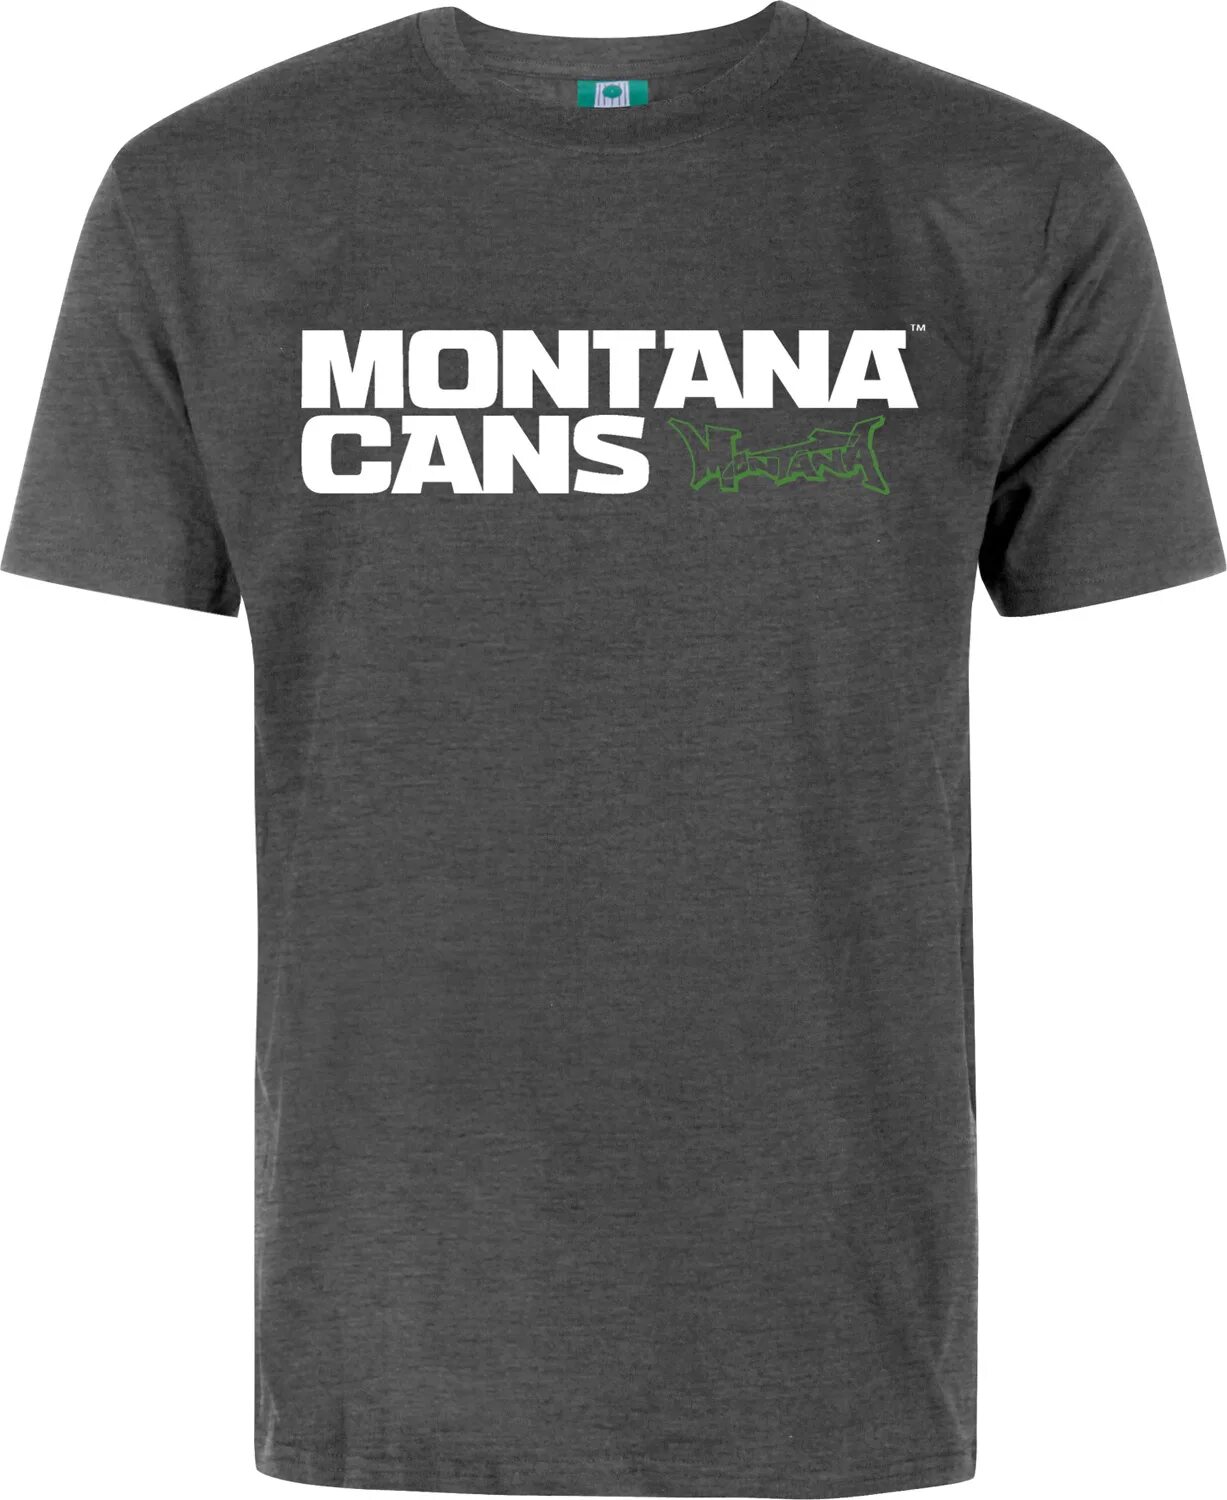 Футболка Montana. Футболки Монтана cans. Футболка Монтана мужская. Футболка с логотипом Монтана. Montana cans